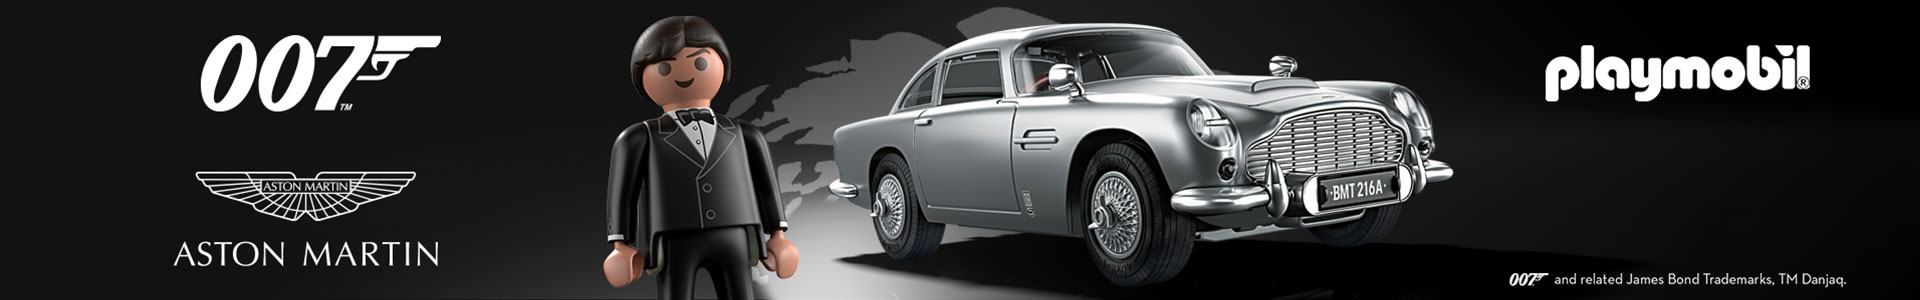 Playmobil - 007 Aston Martin